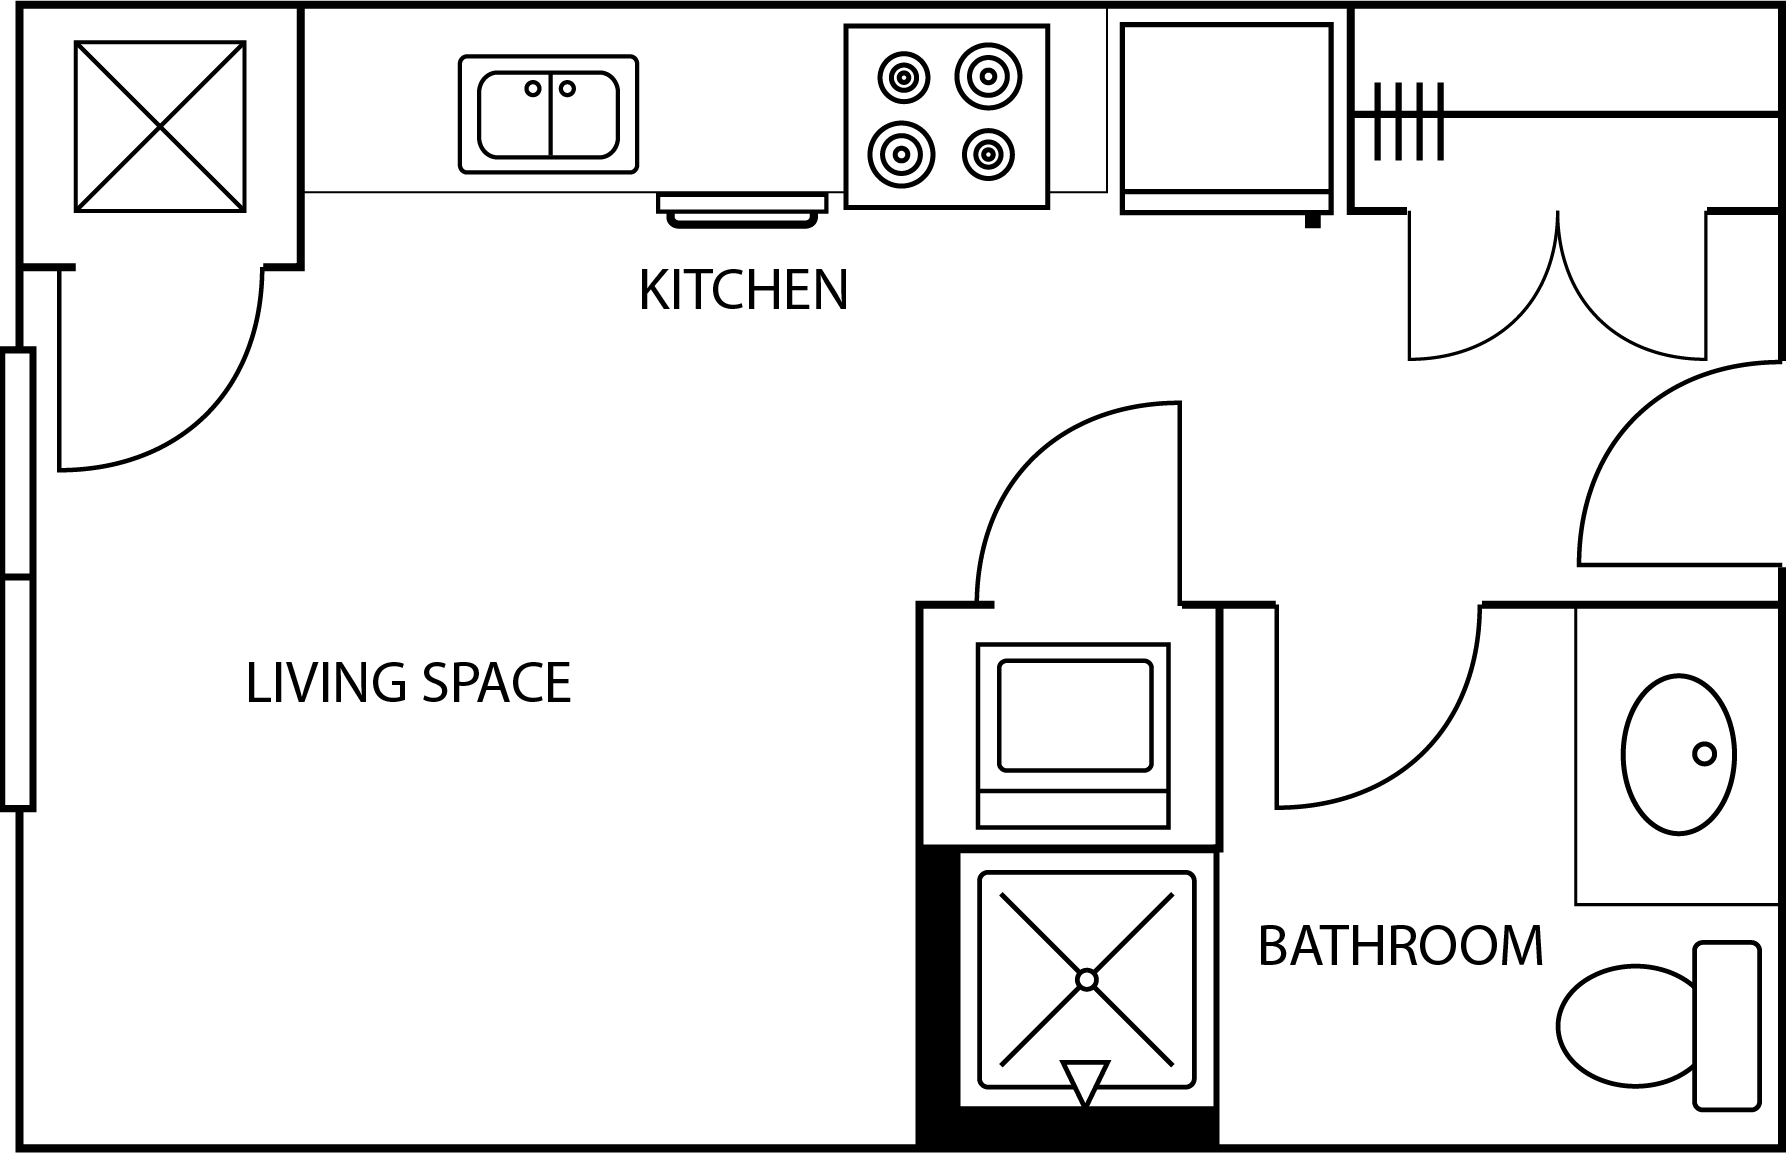 Aspire Floorplan Layout Illustration - Efficiency for 2 People